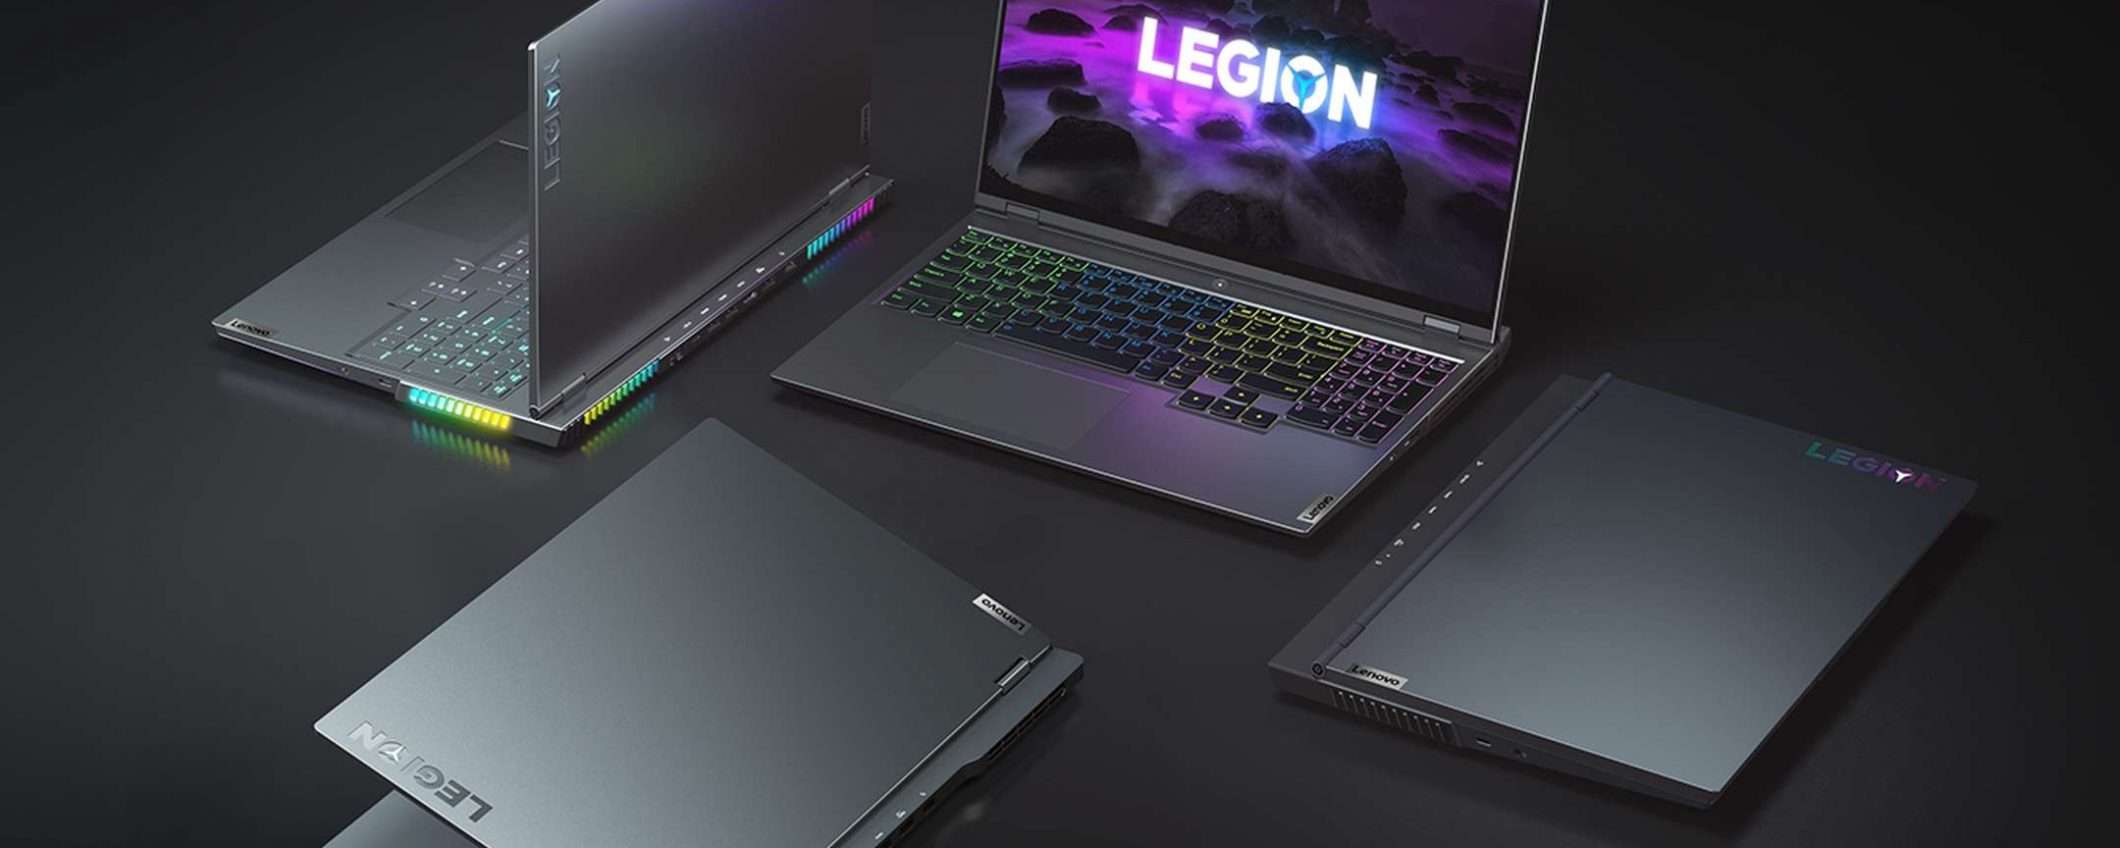 CES 2021: Lenovo Legion, notebook con GeForce RTX 30